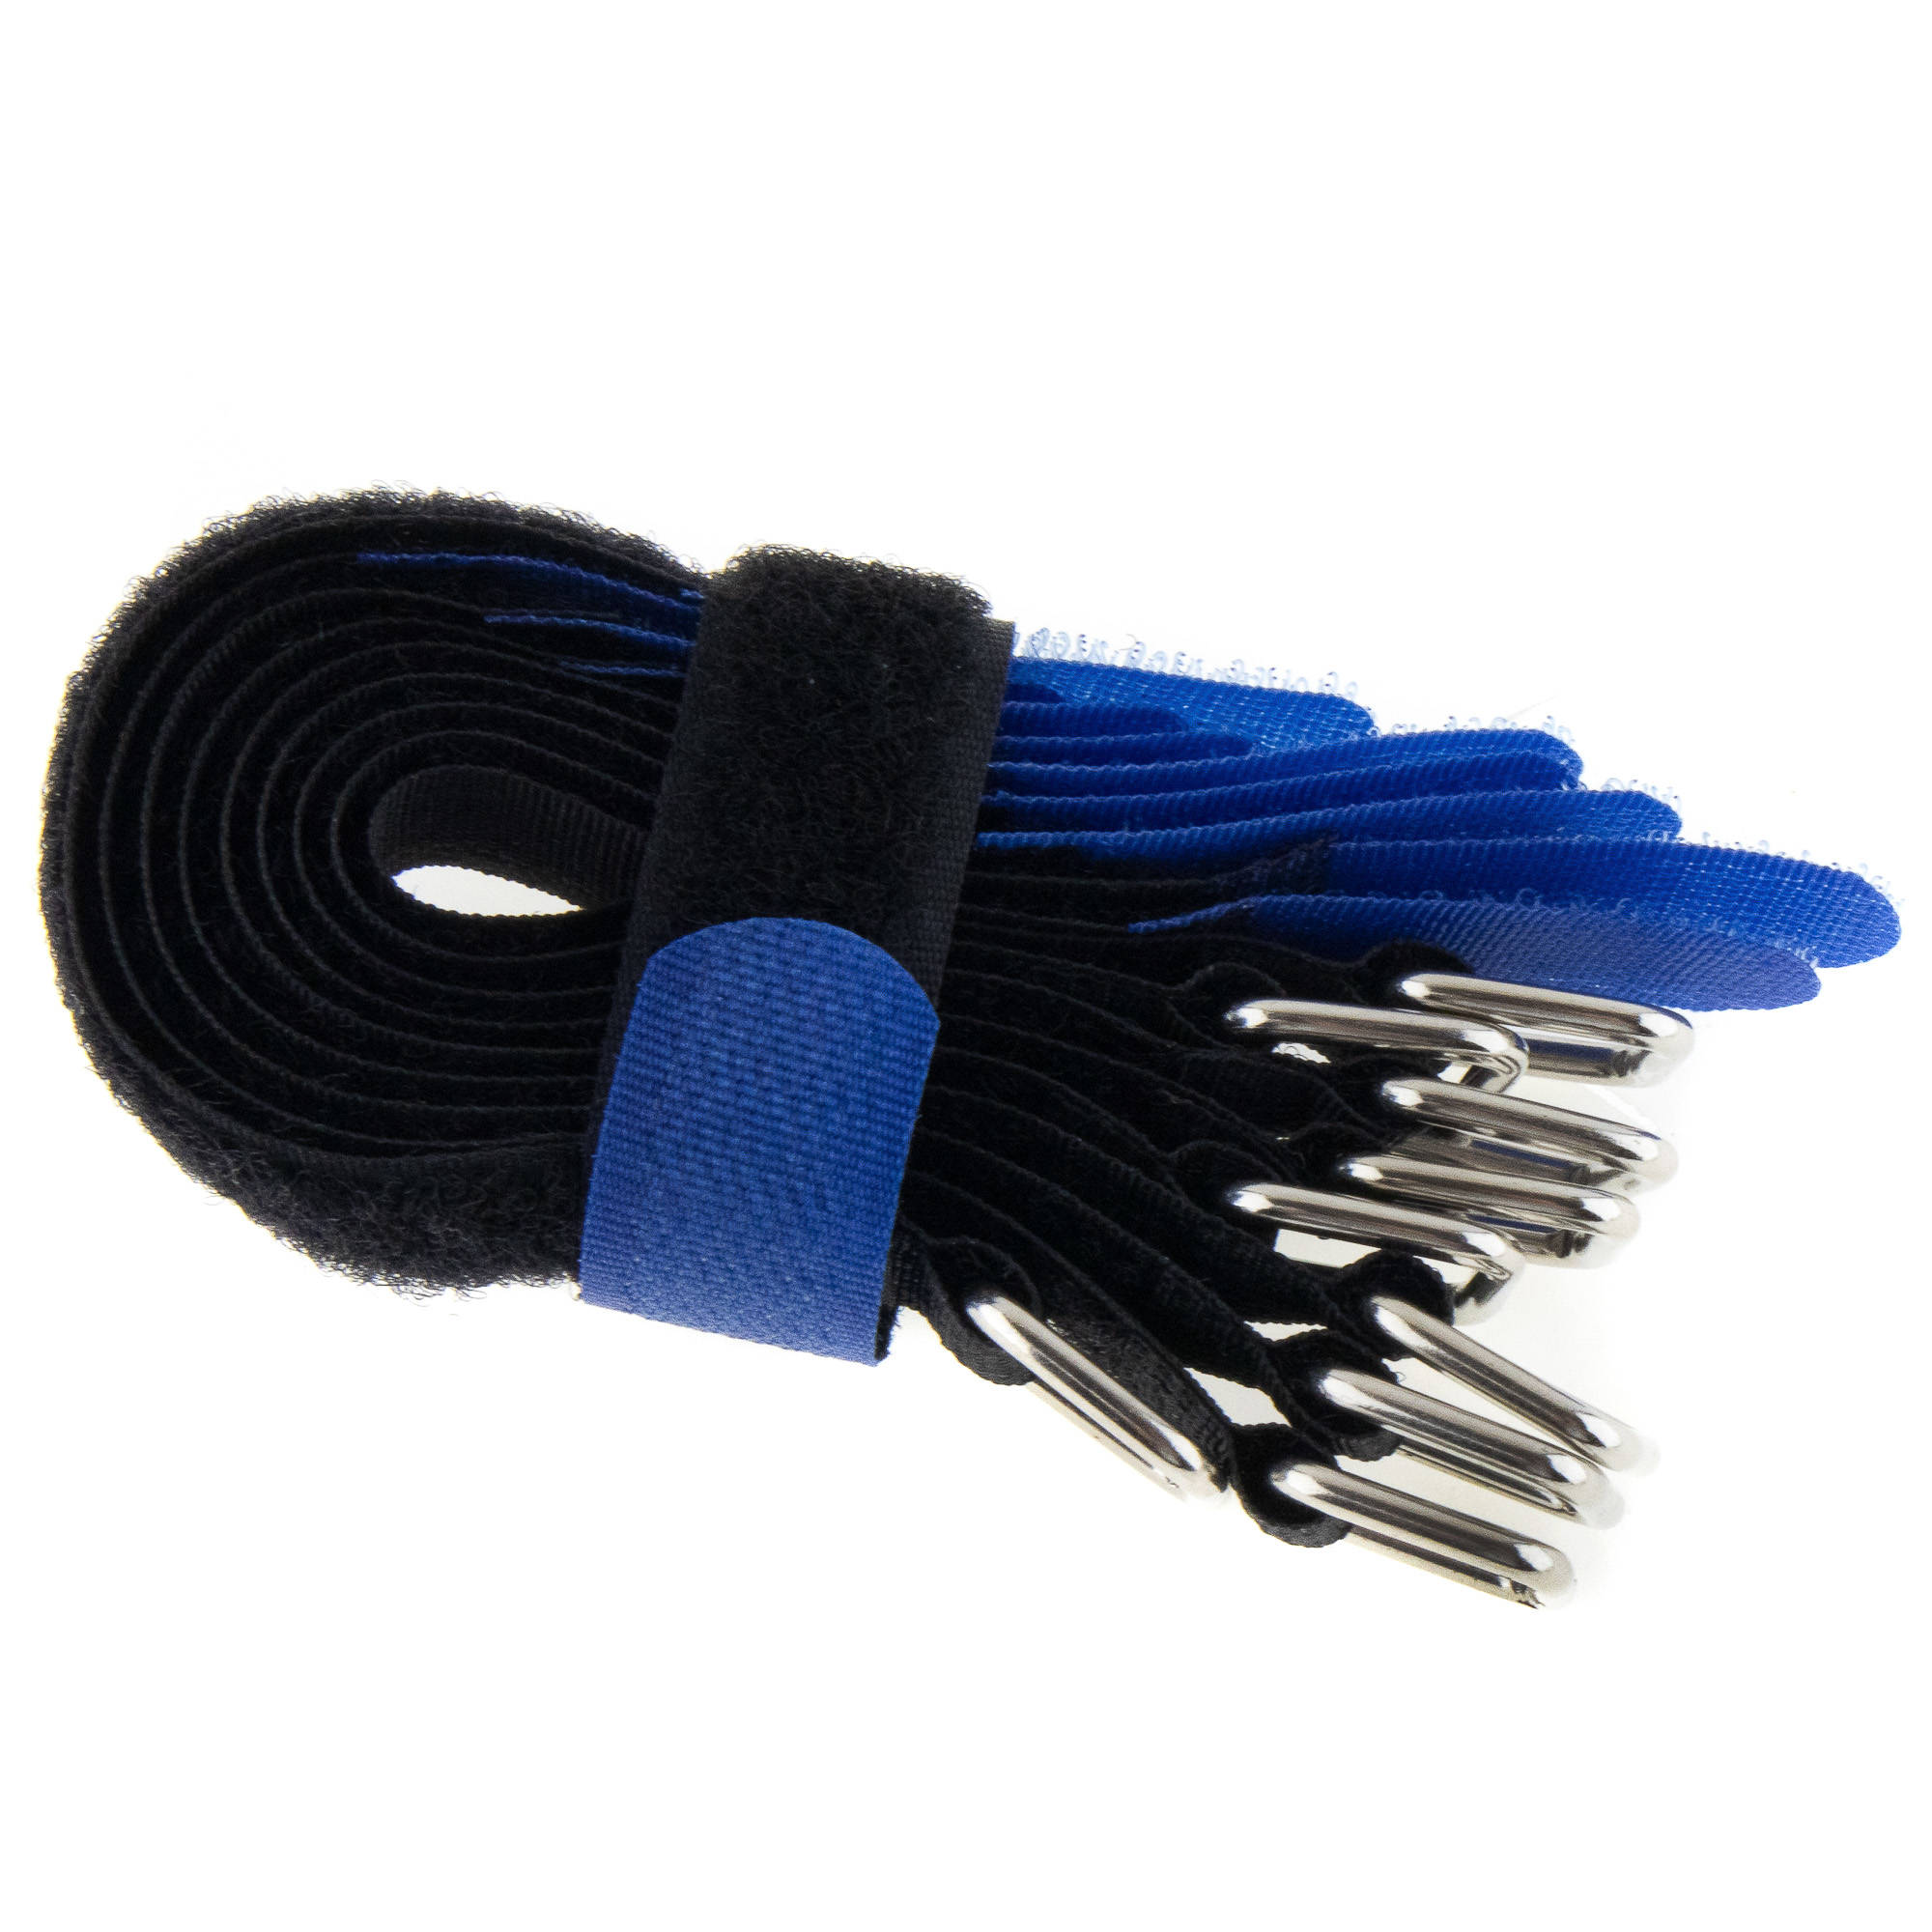 Hook-and-loop strap 150x16, black/blue, 10PCS